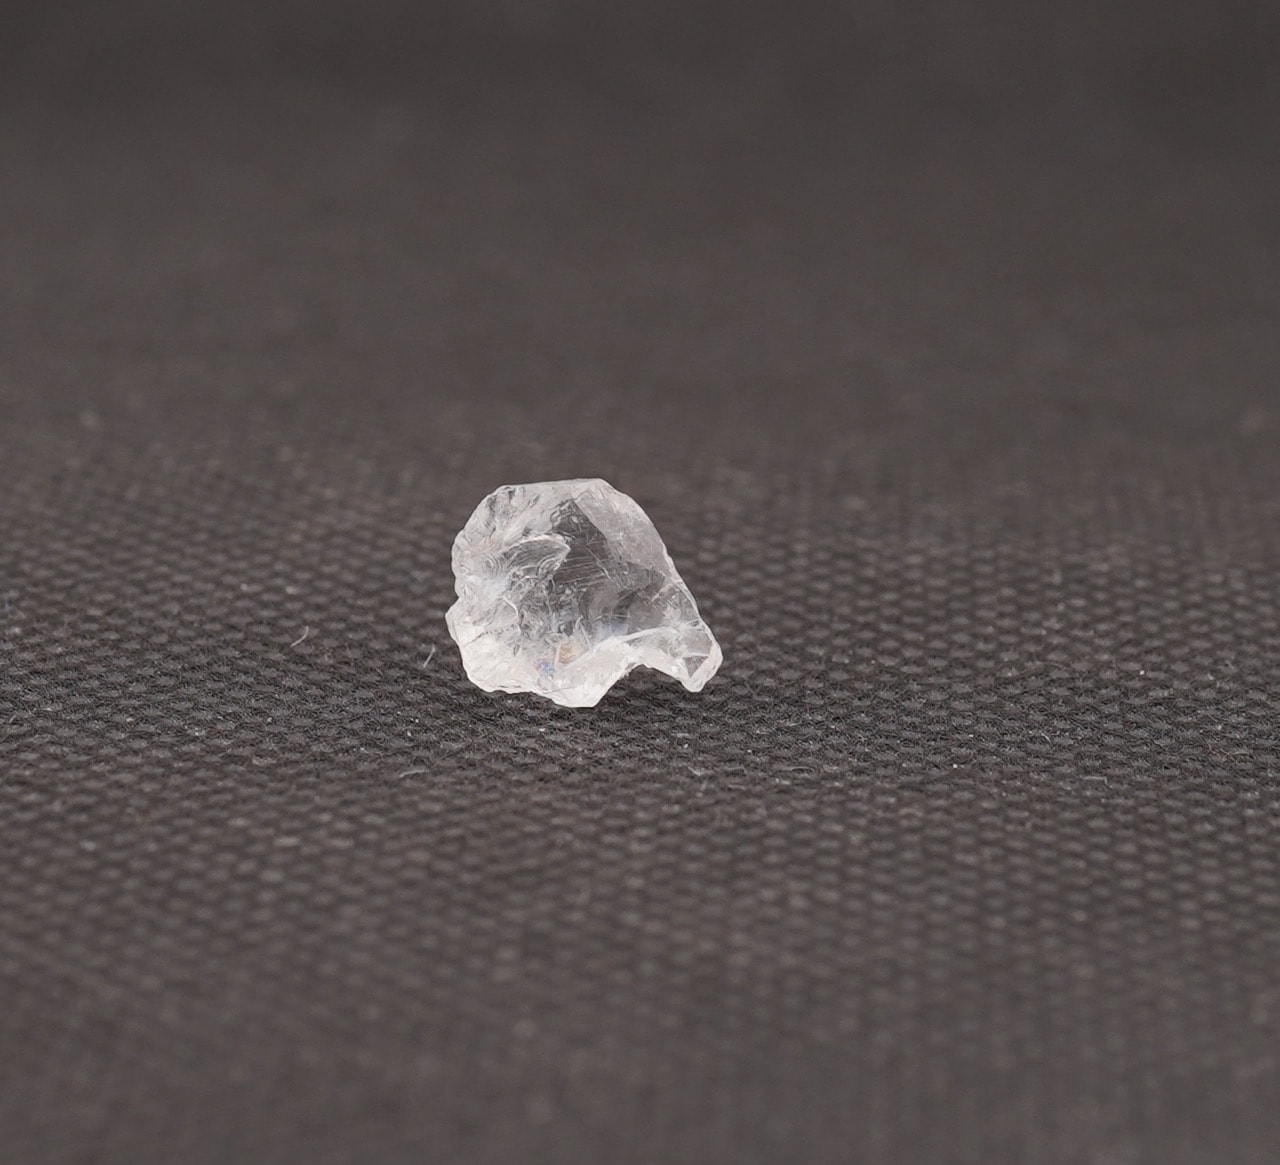 Fenacit nigerian cristal natural unicat f324